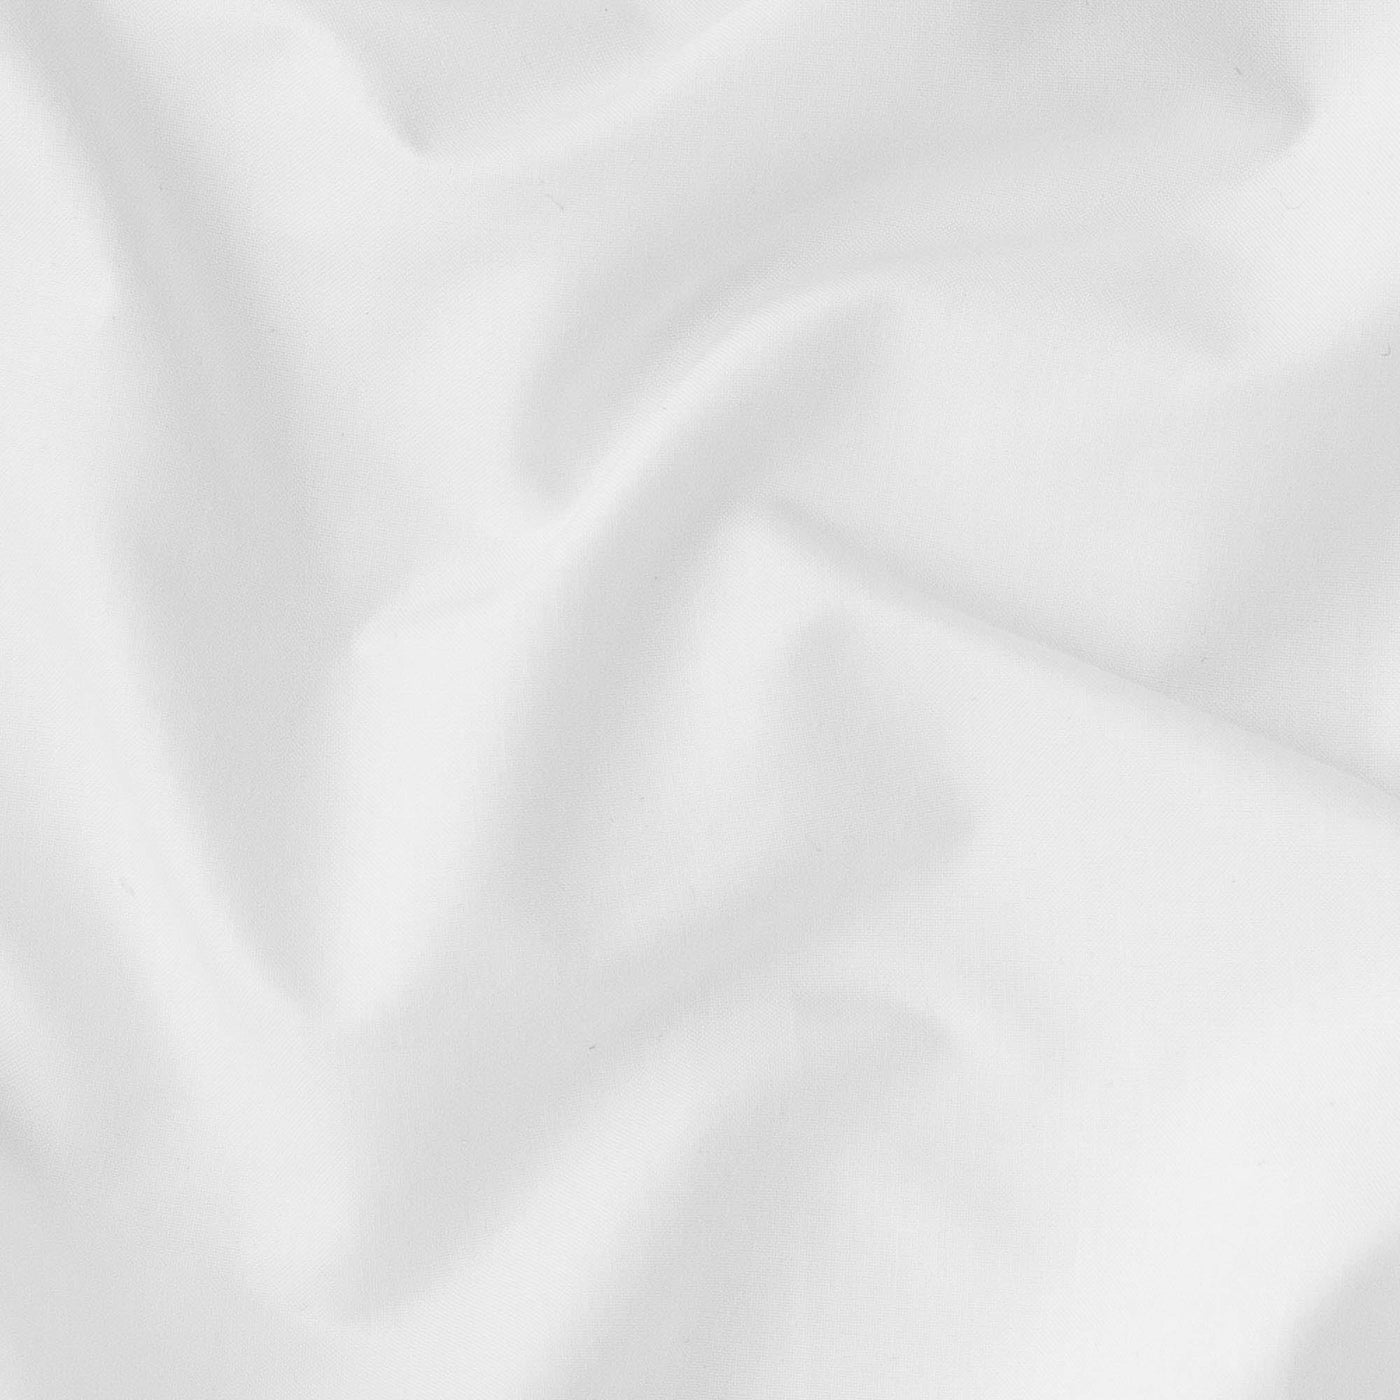 Fabric Pandit Cut Piece 0.75M (CUT PIECE) Pure White Cotton Poplin Men's Shirt Fabric (Width 58 inch)